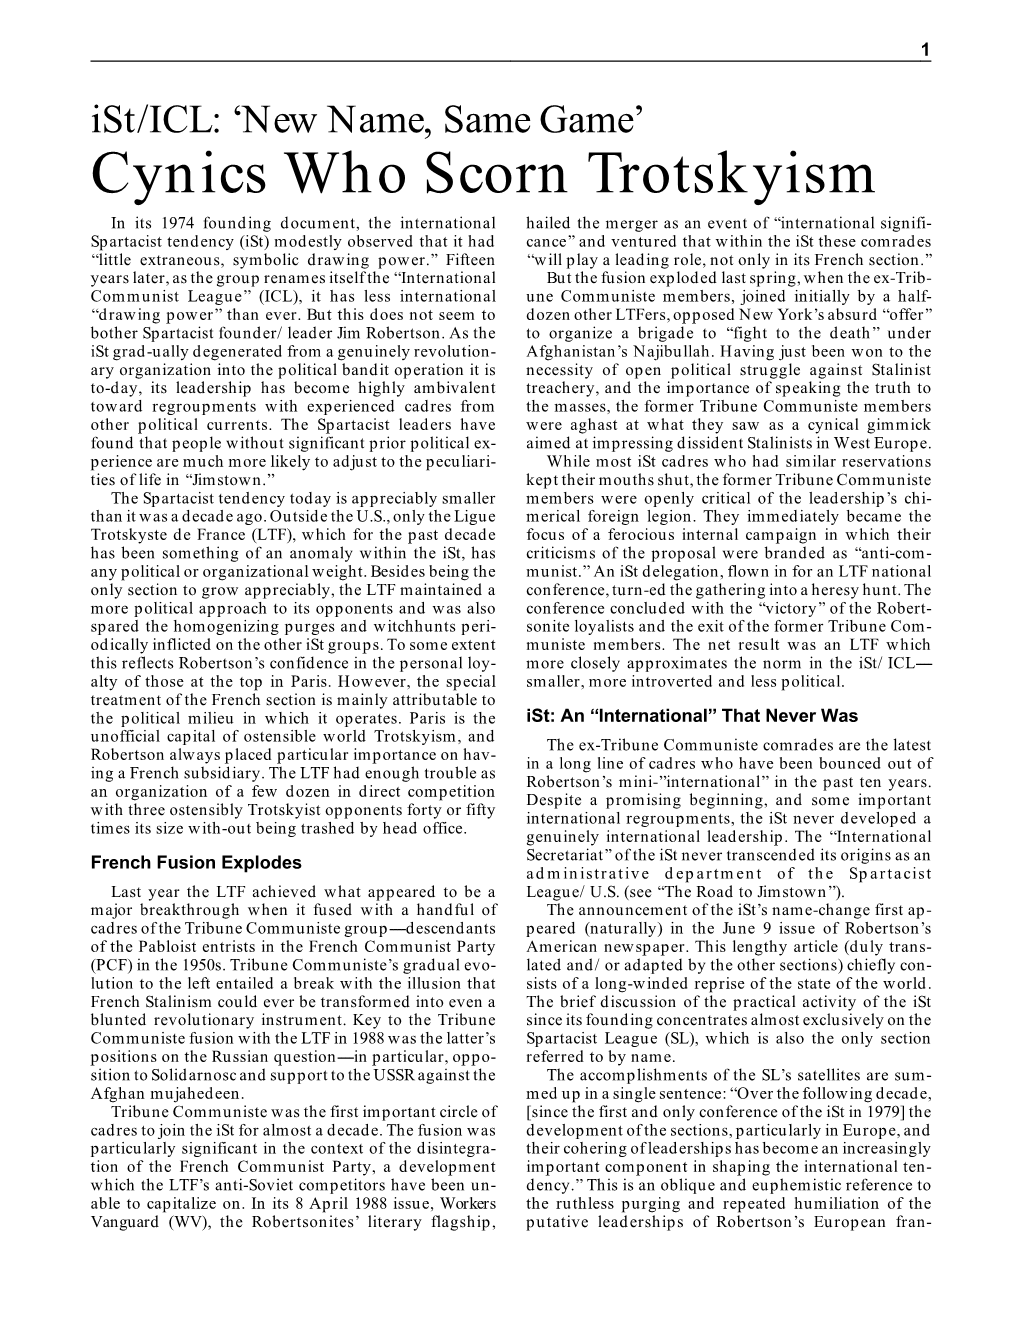 Cynics Who Scorn Trotskyism